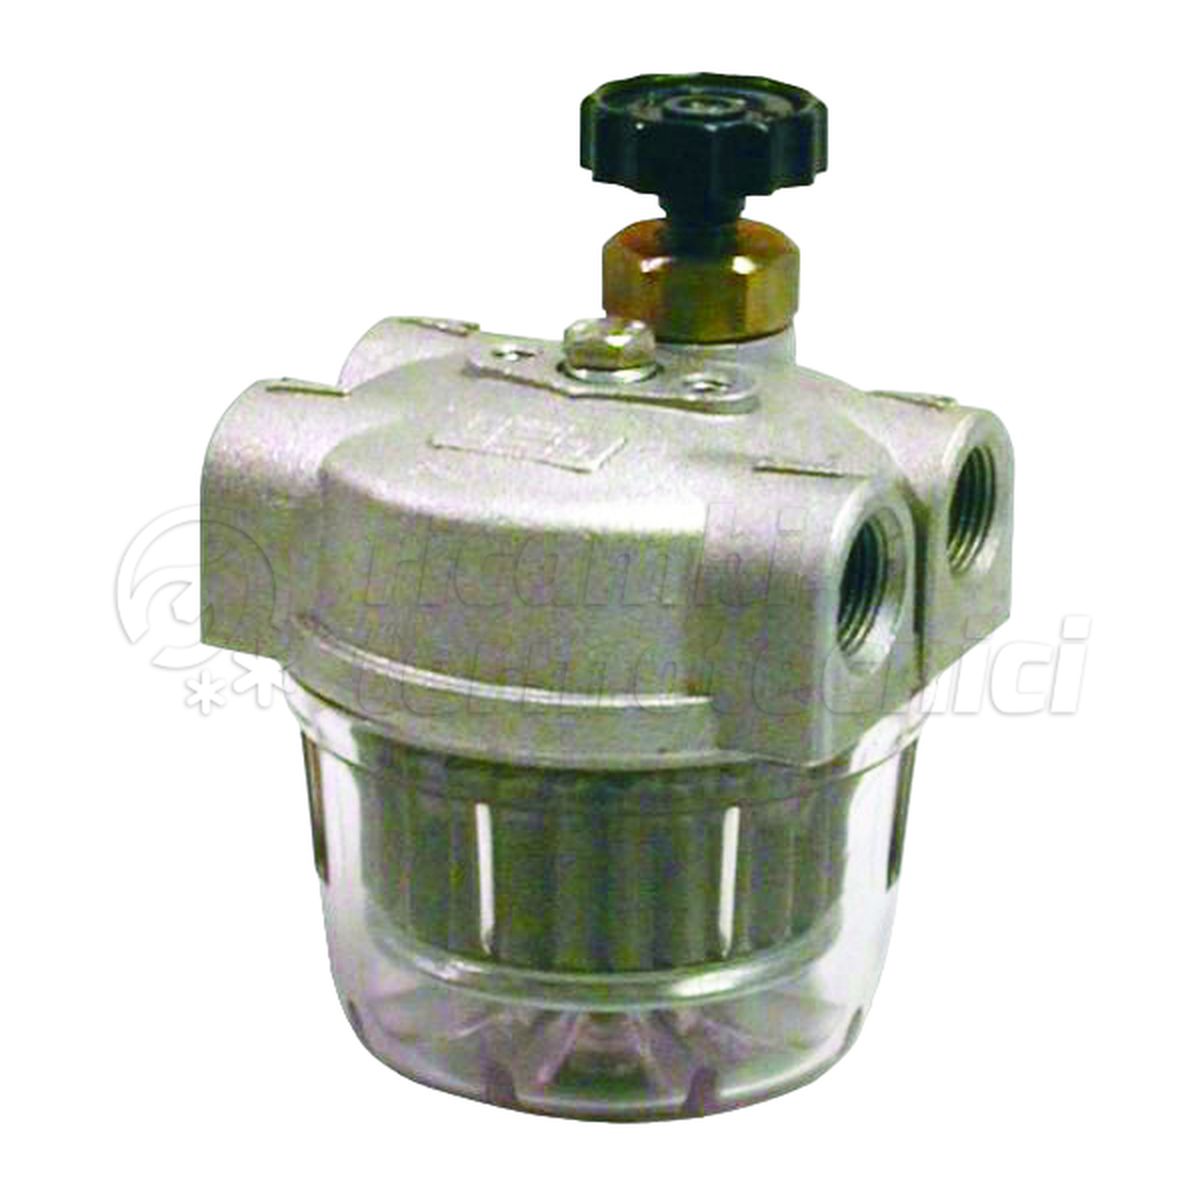 Filtro gasolio con separatore - 3/8 FF - 70370006 ricambi caldaie